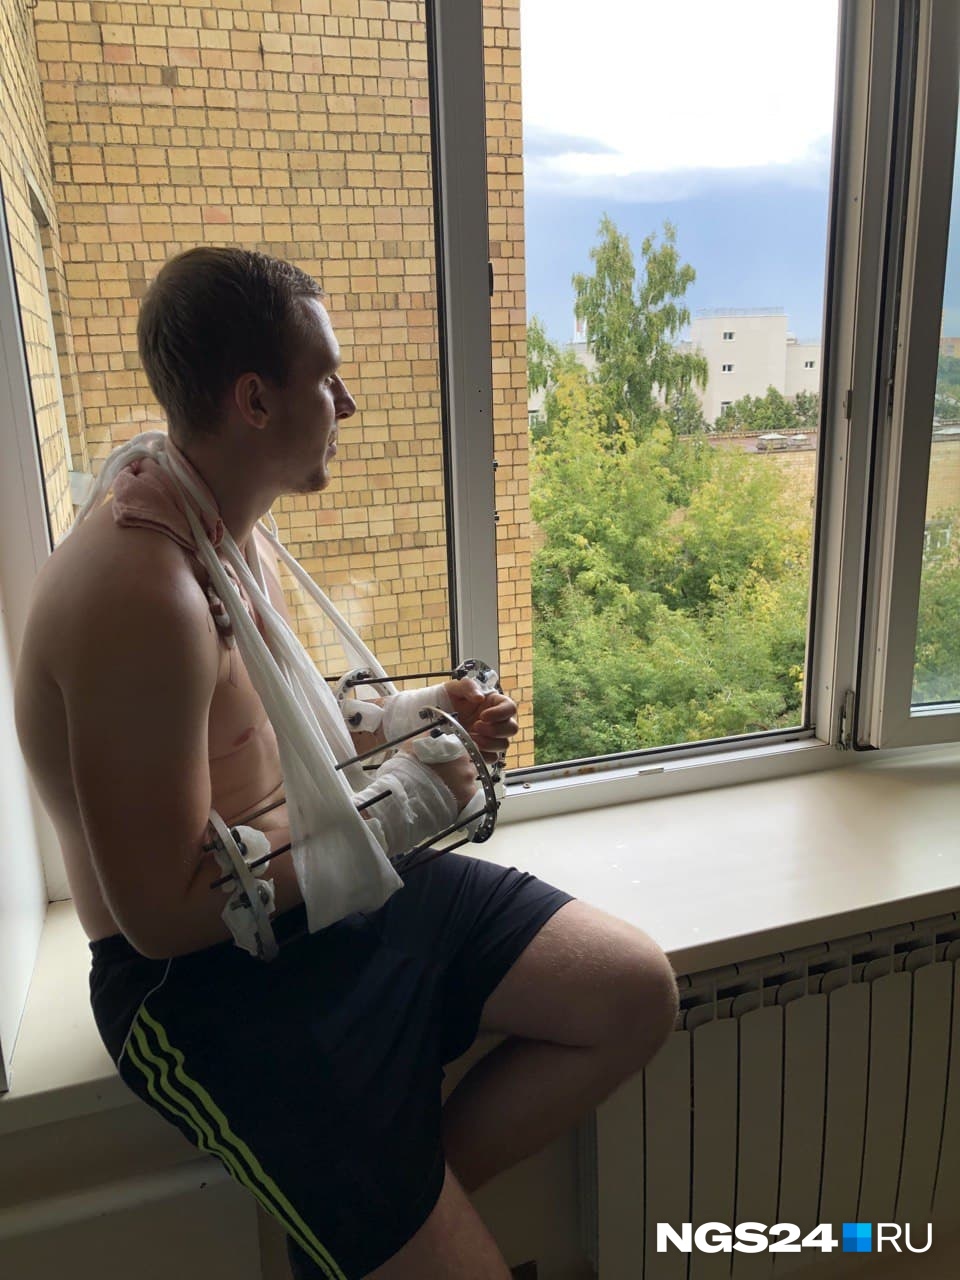 Дмитрий провел в больнице 2 месяца